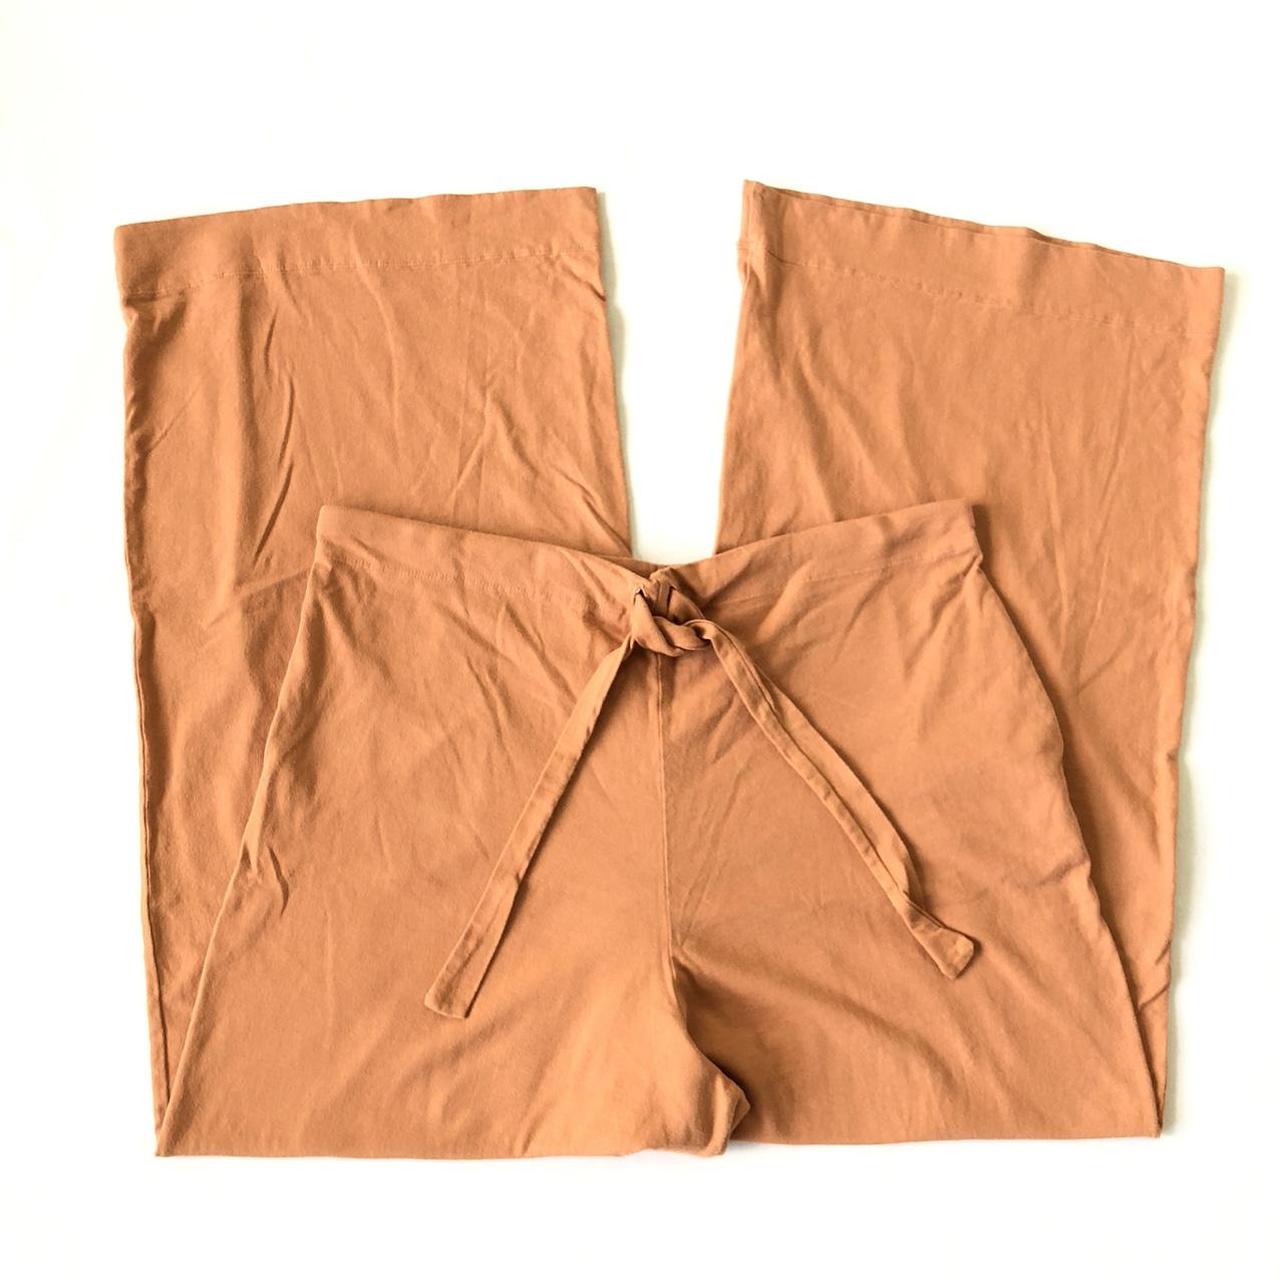 Product Image 1 - Organic Cotton Drawstring Pants by